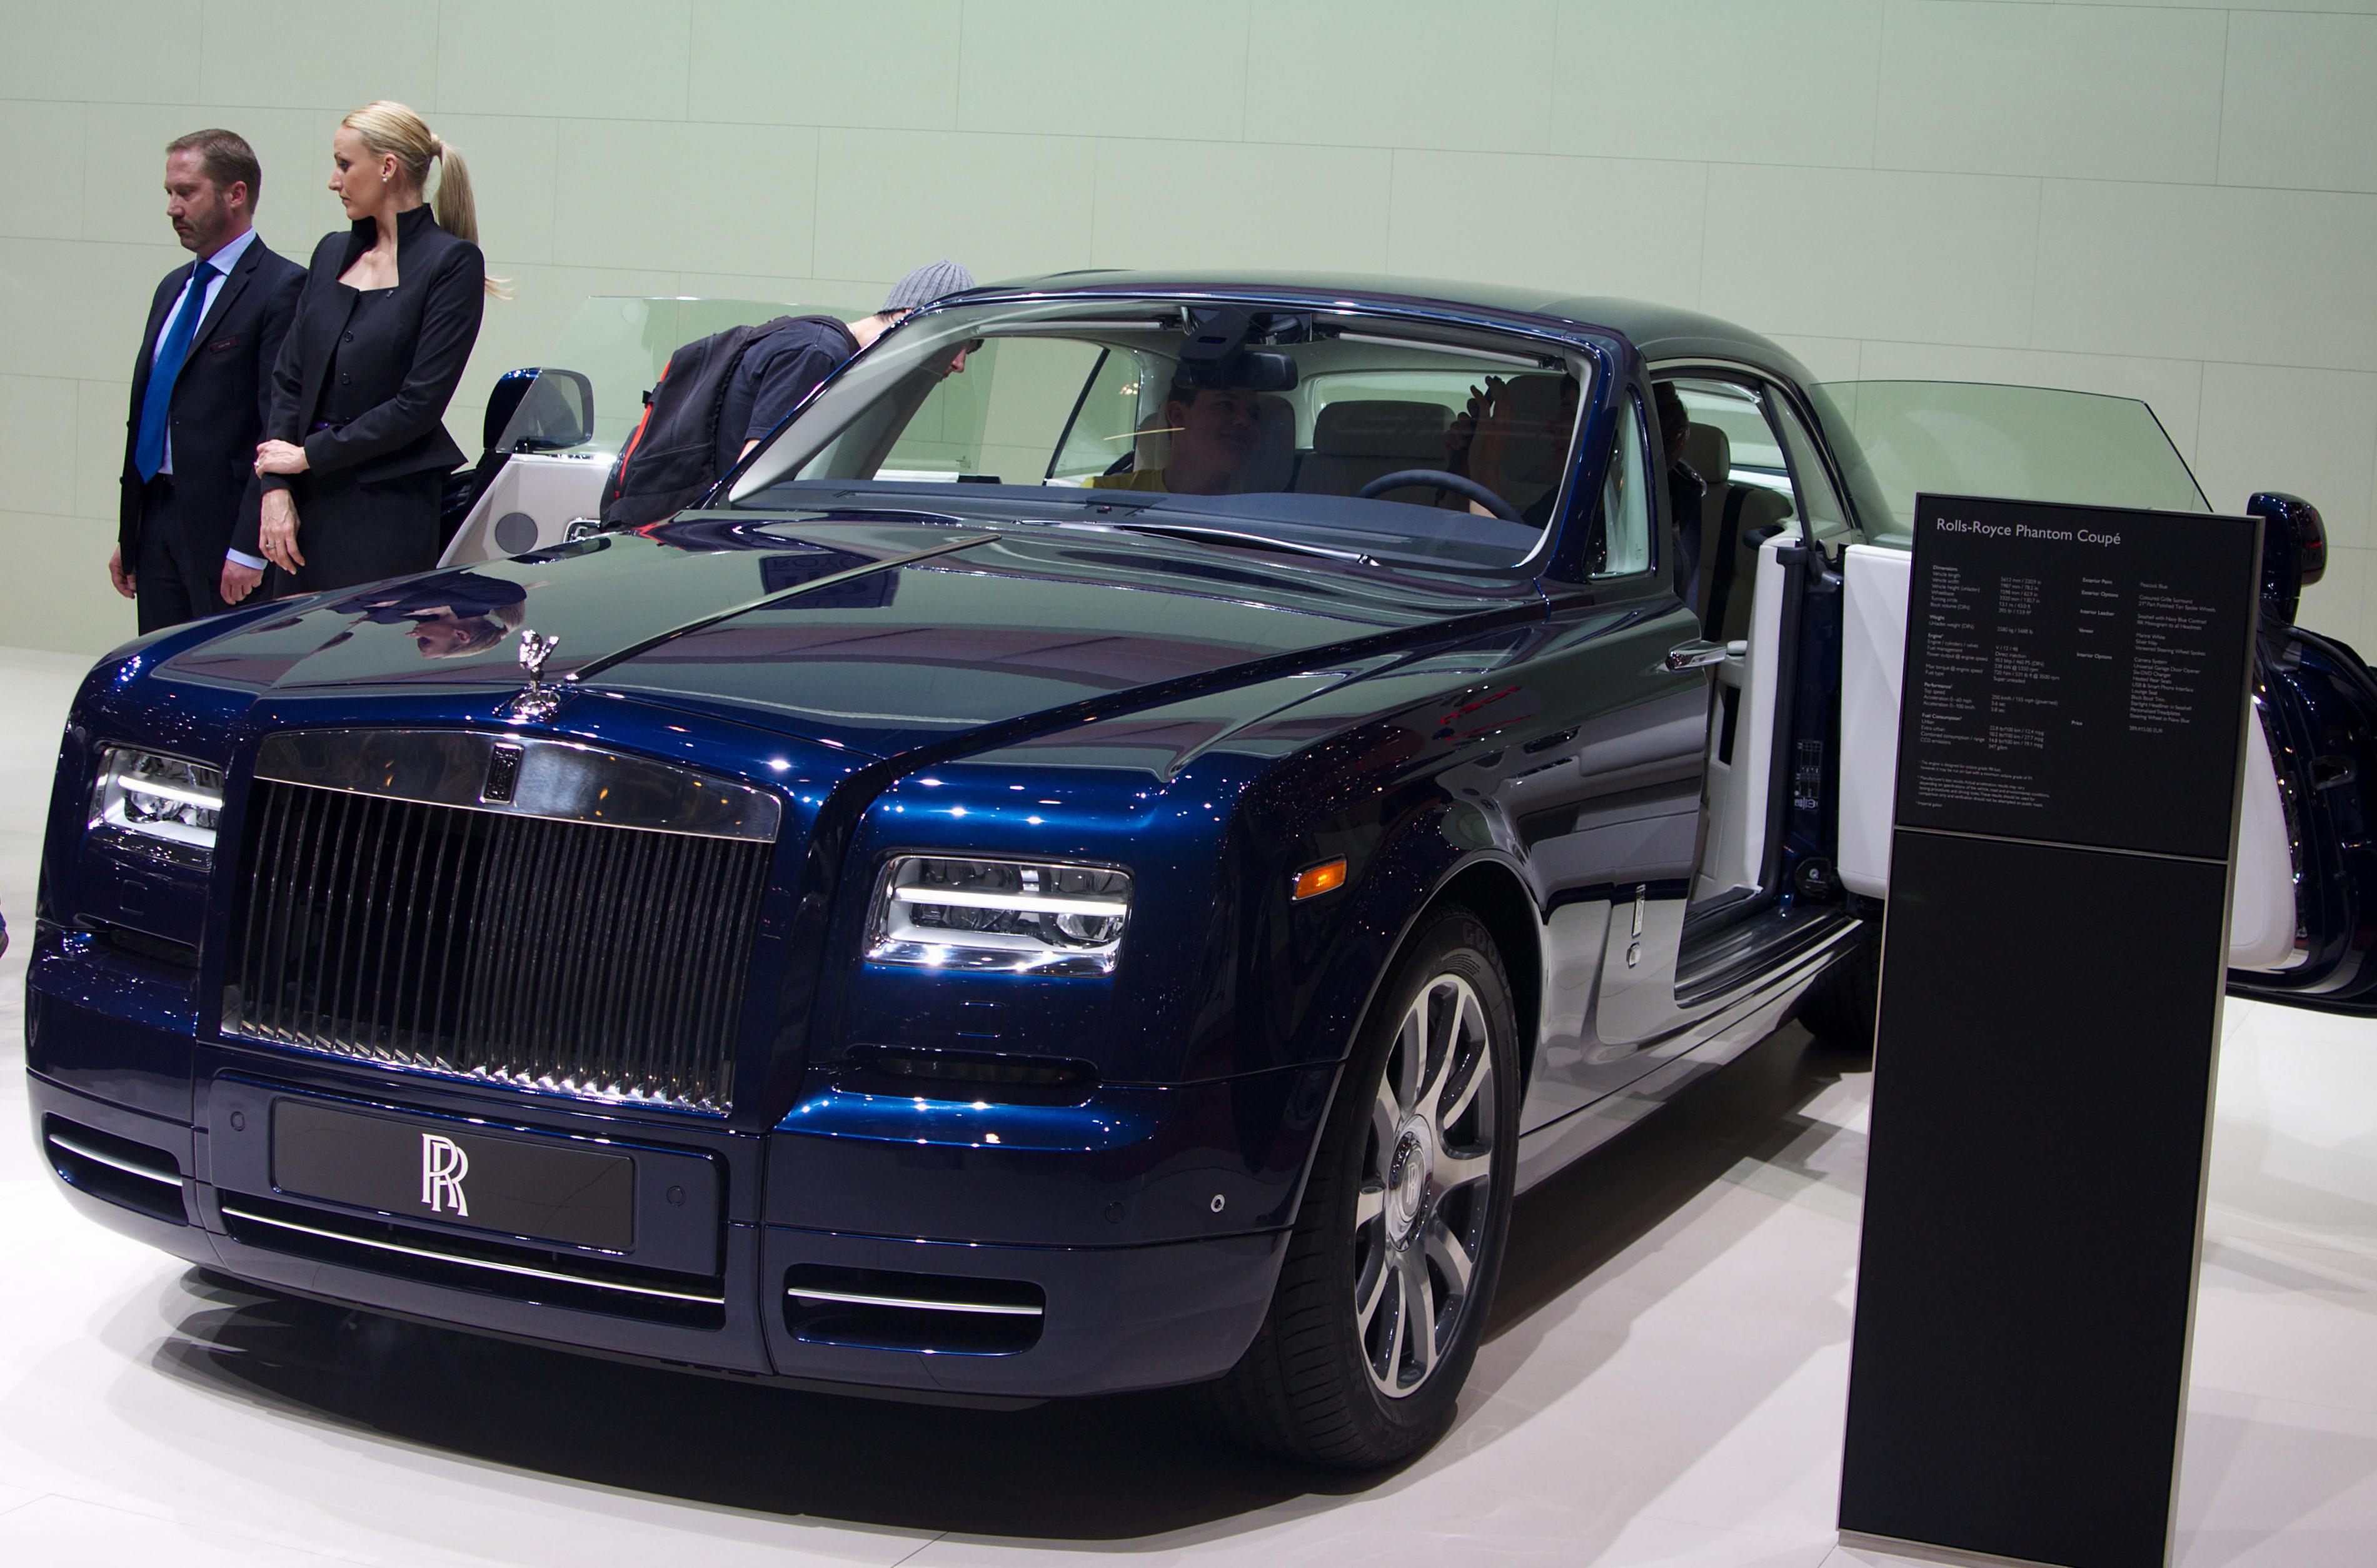 Rolls-Royce Phantom Coupe concept coupe